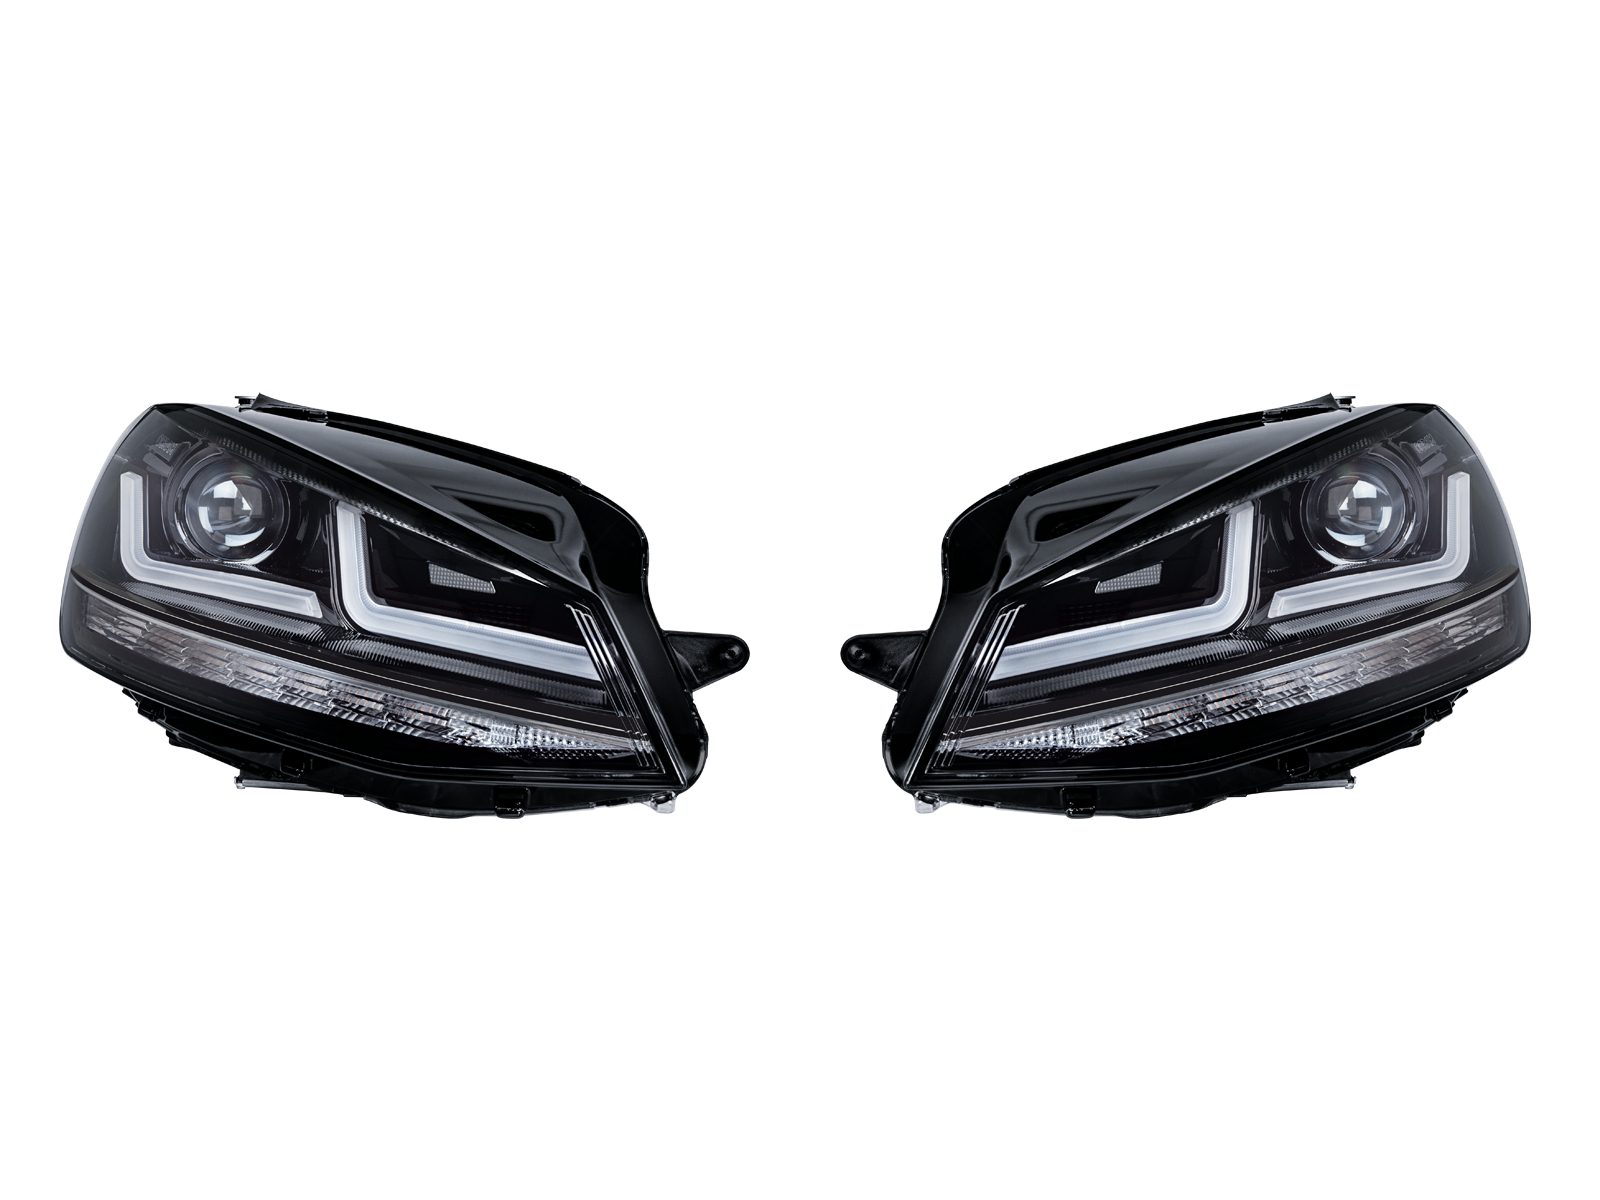 Scheinwerfer U-Tube LED Tagfahrlicht für VW Golf 7 Bj. 12-16 Schwarz Chrom  mit LED Blinker, Bj. 2012-2016, Golf 7, Golf, VW, Scheinwerfer